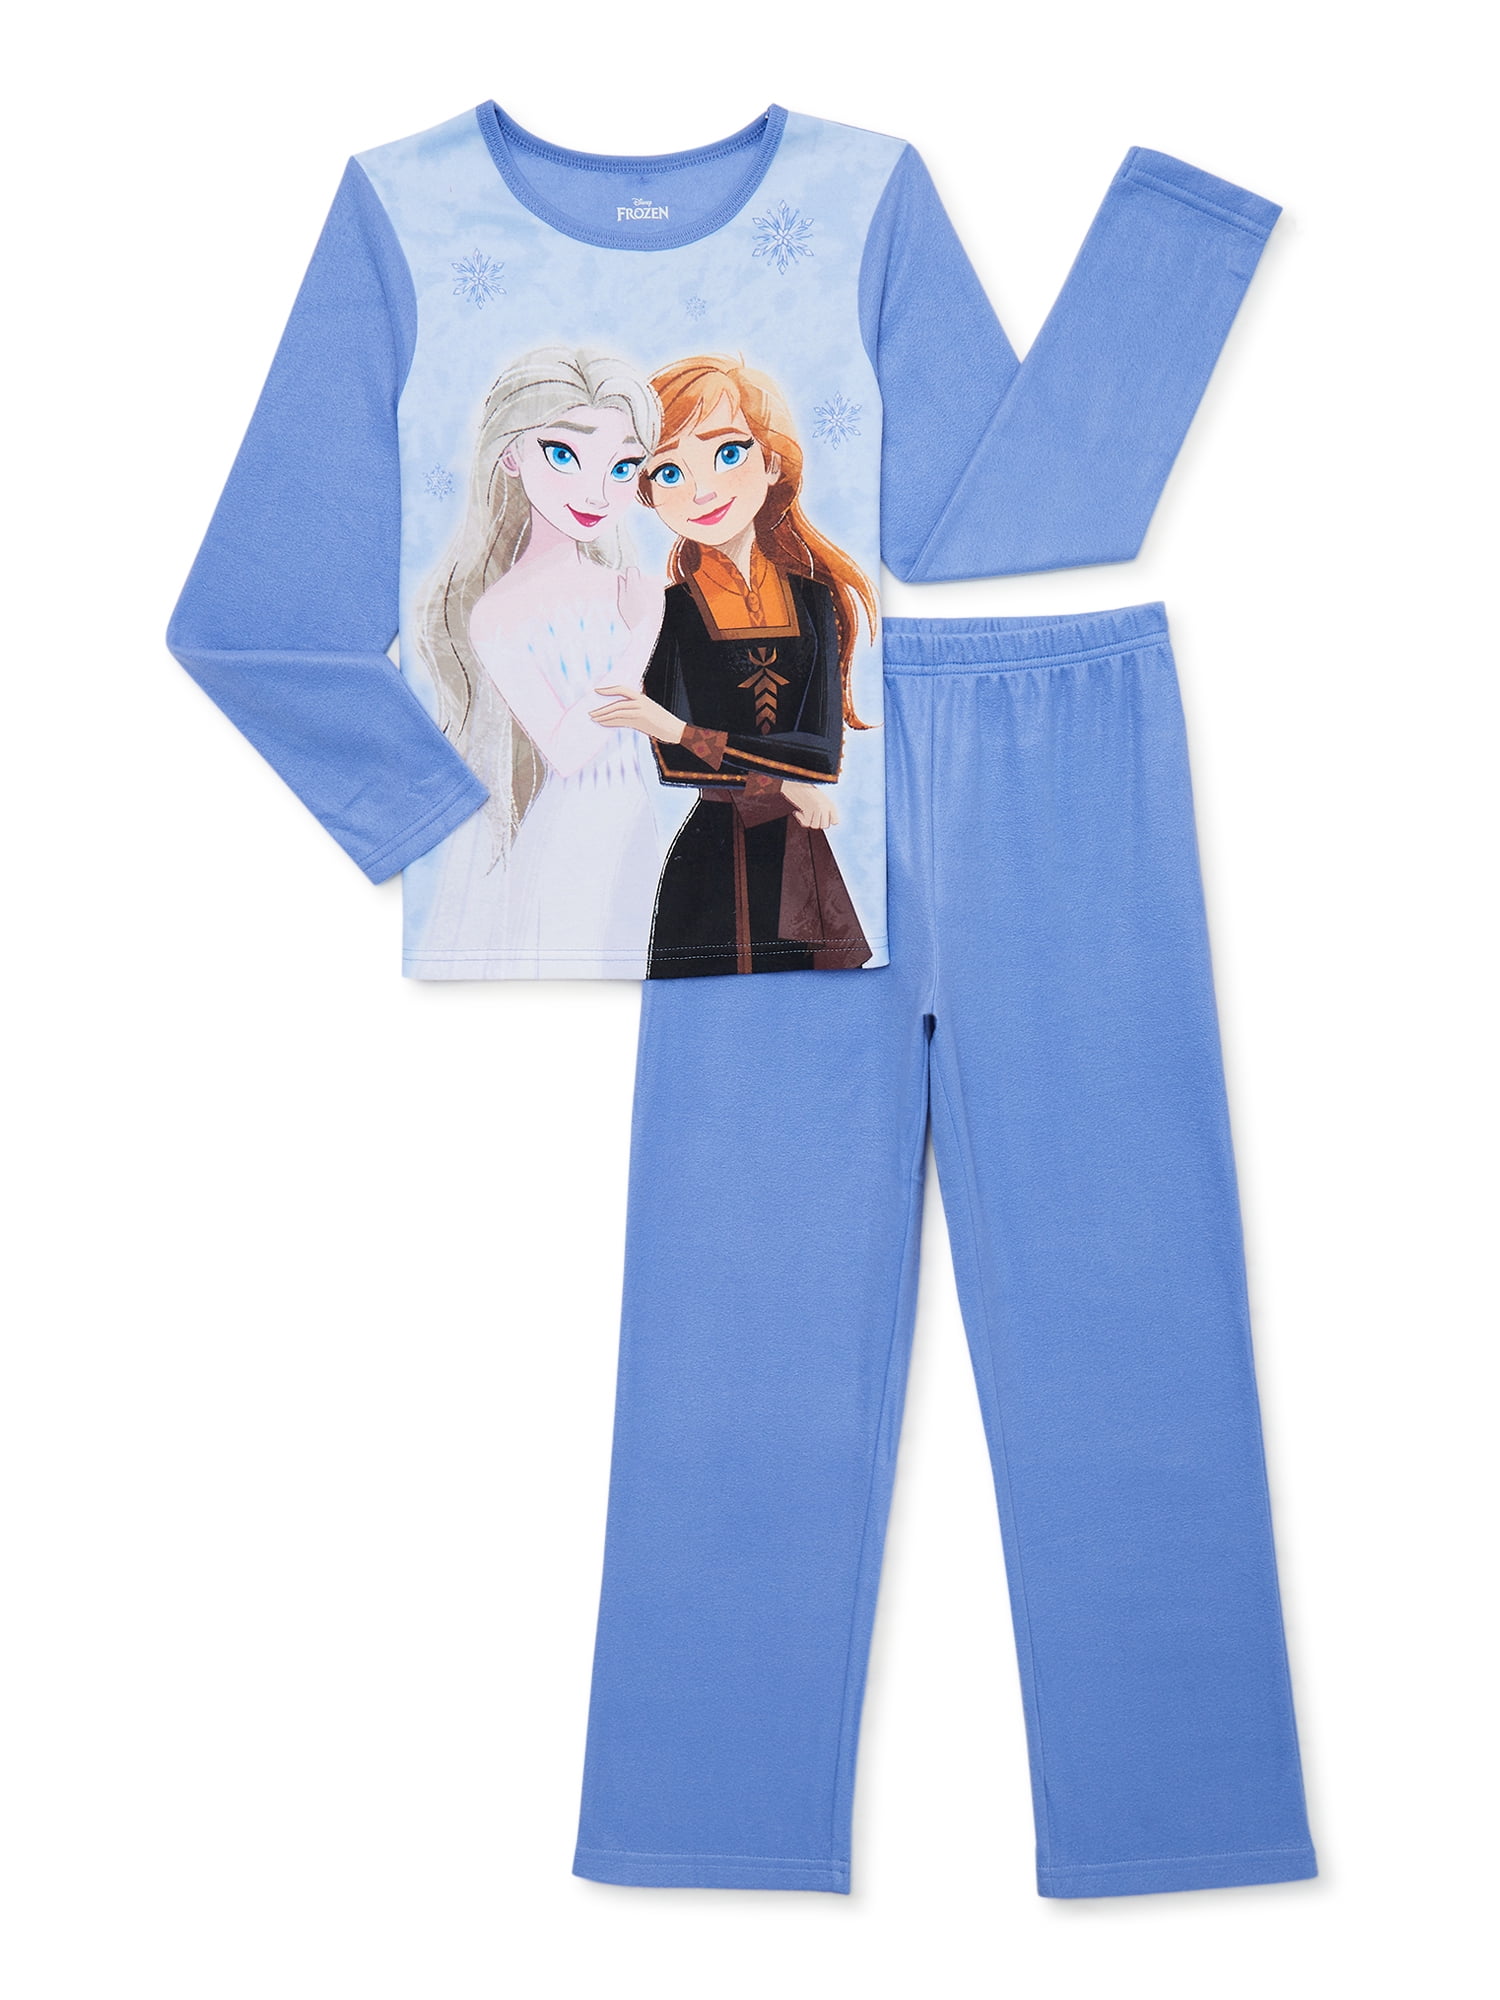 Disney Frozen Girls Long Sleeve Top and Pants Pajama Sleep Set, 2-Piece, Sizes 4-12